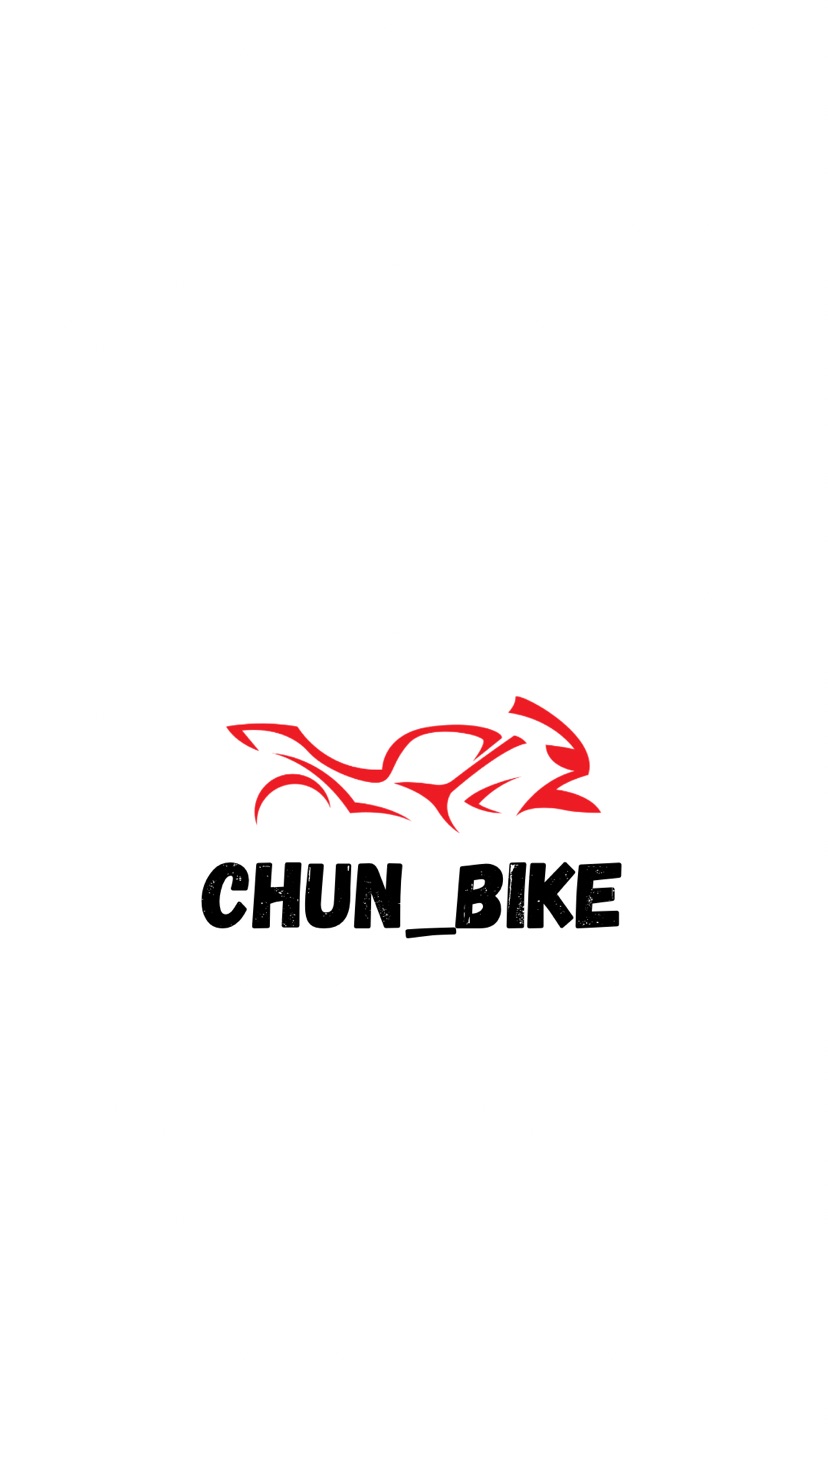 Shop online with CHUN_BIKE now! Visit CHUN_BIKE on Lazada.